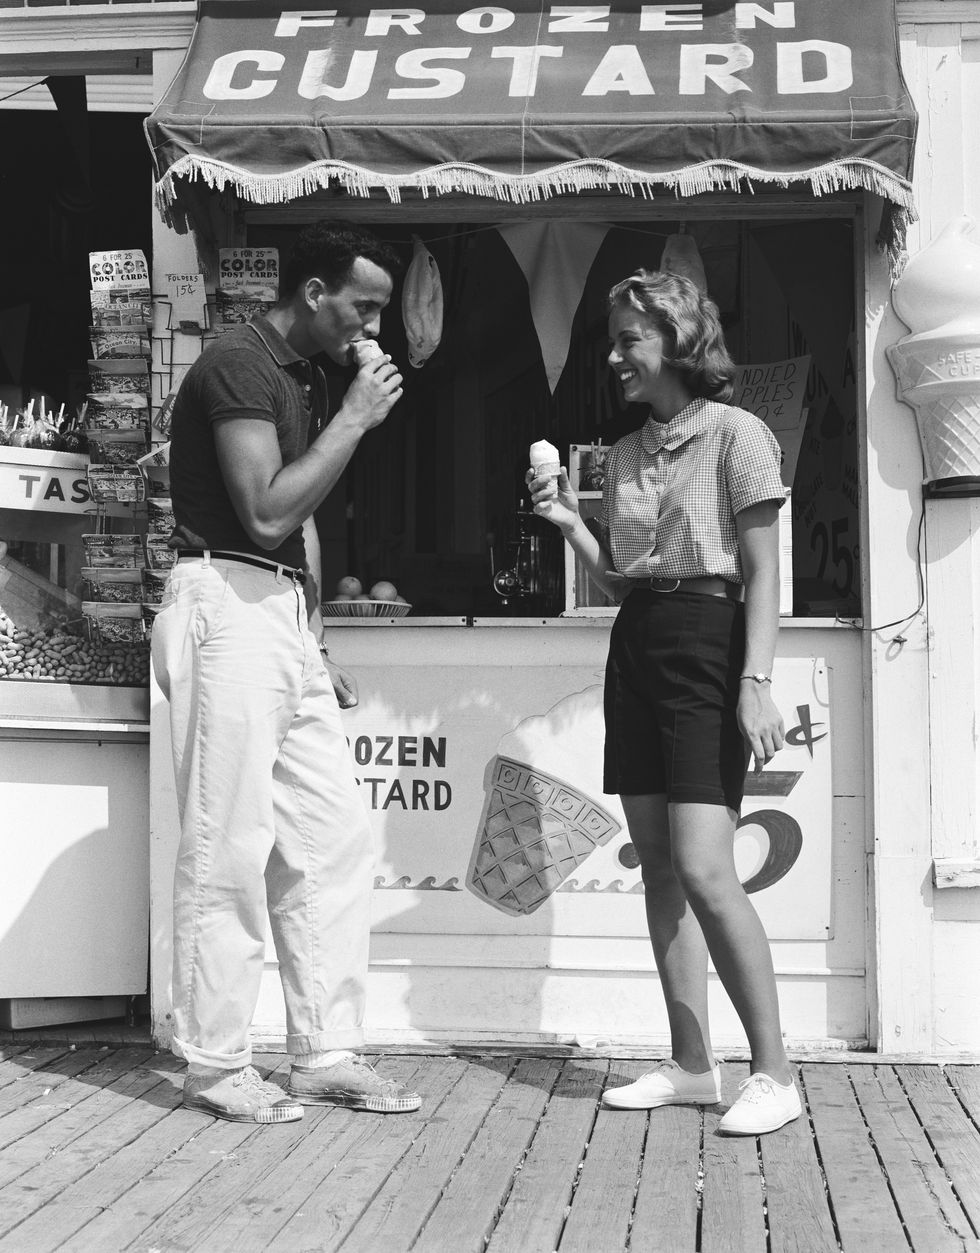 couple getting ice cream